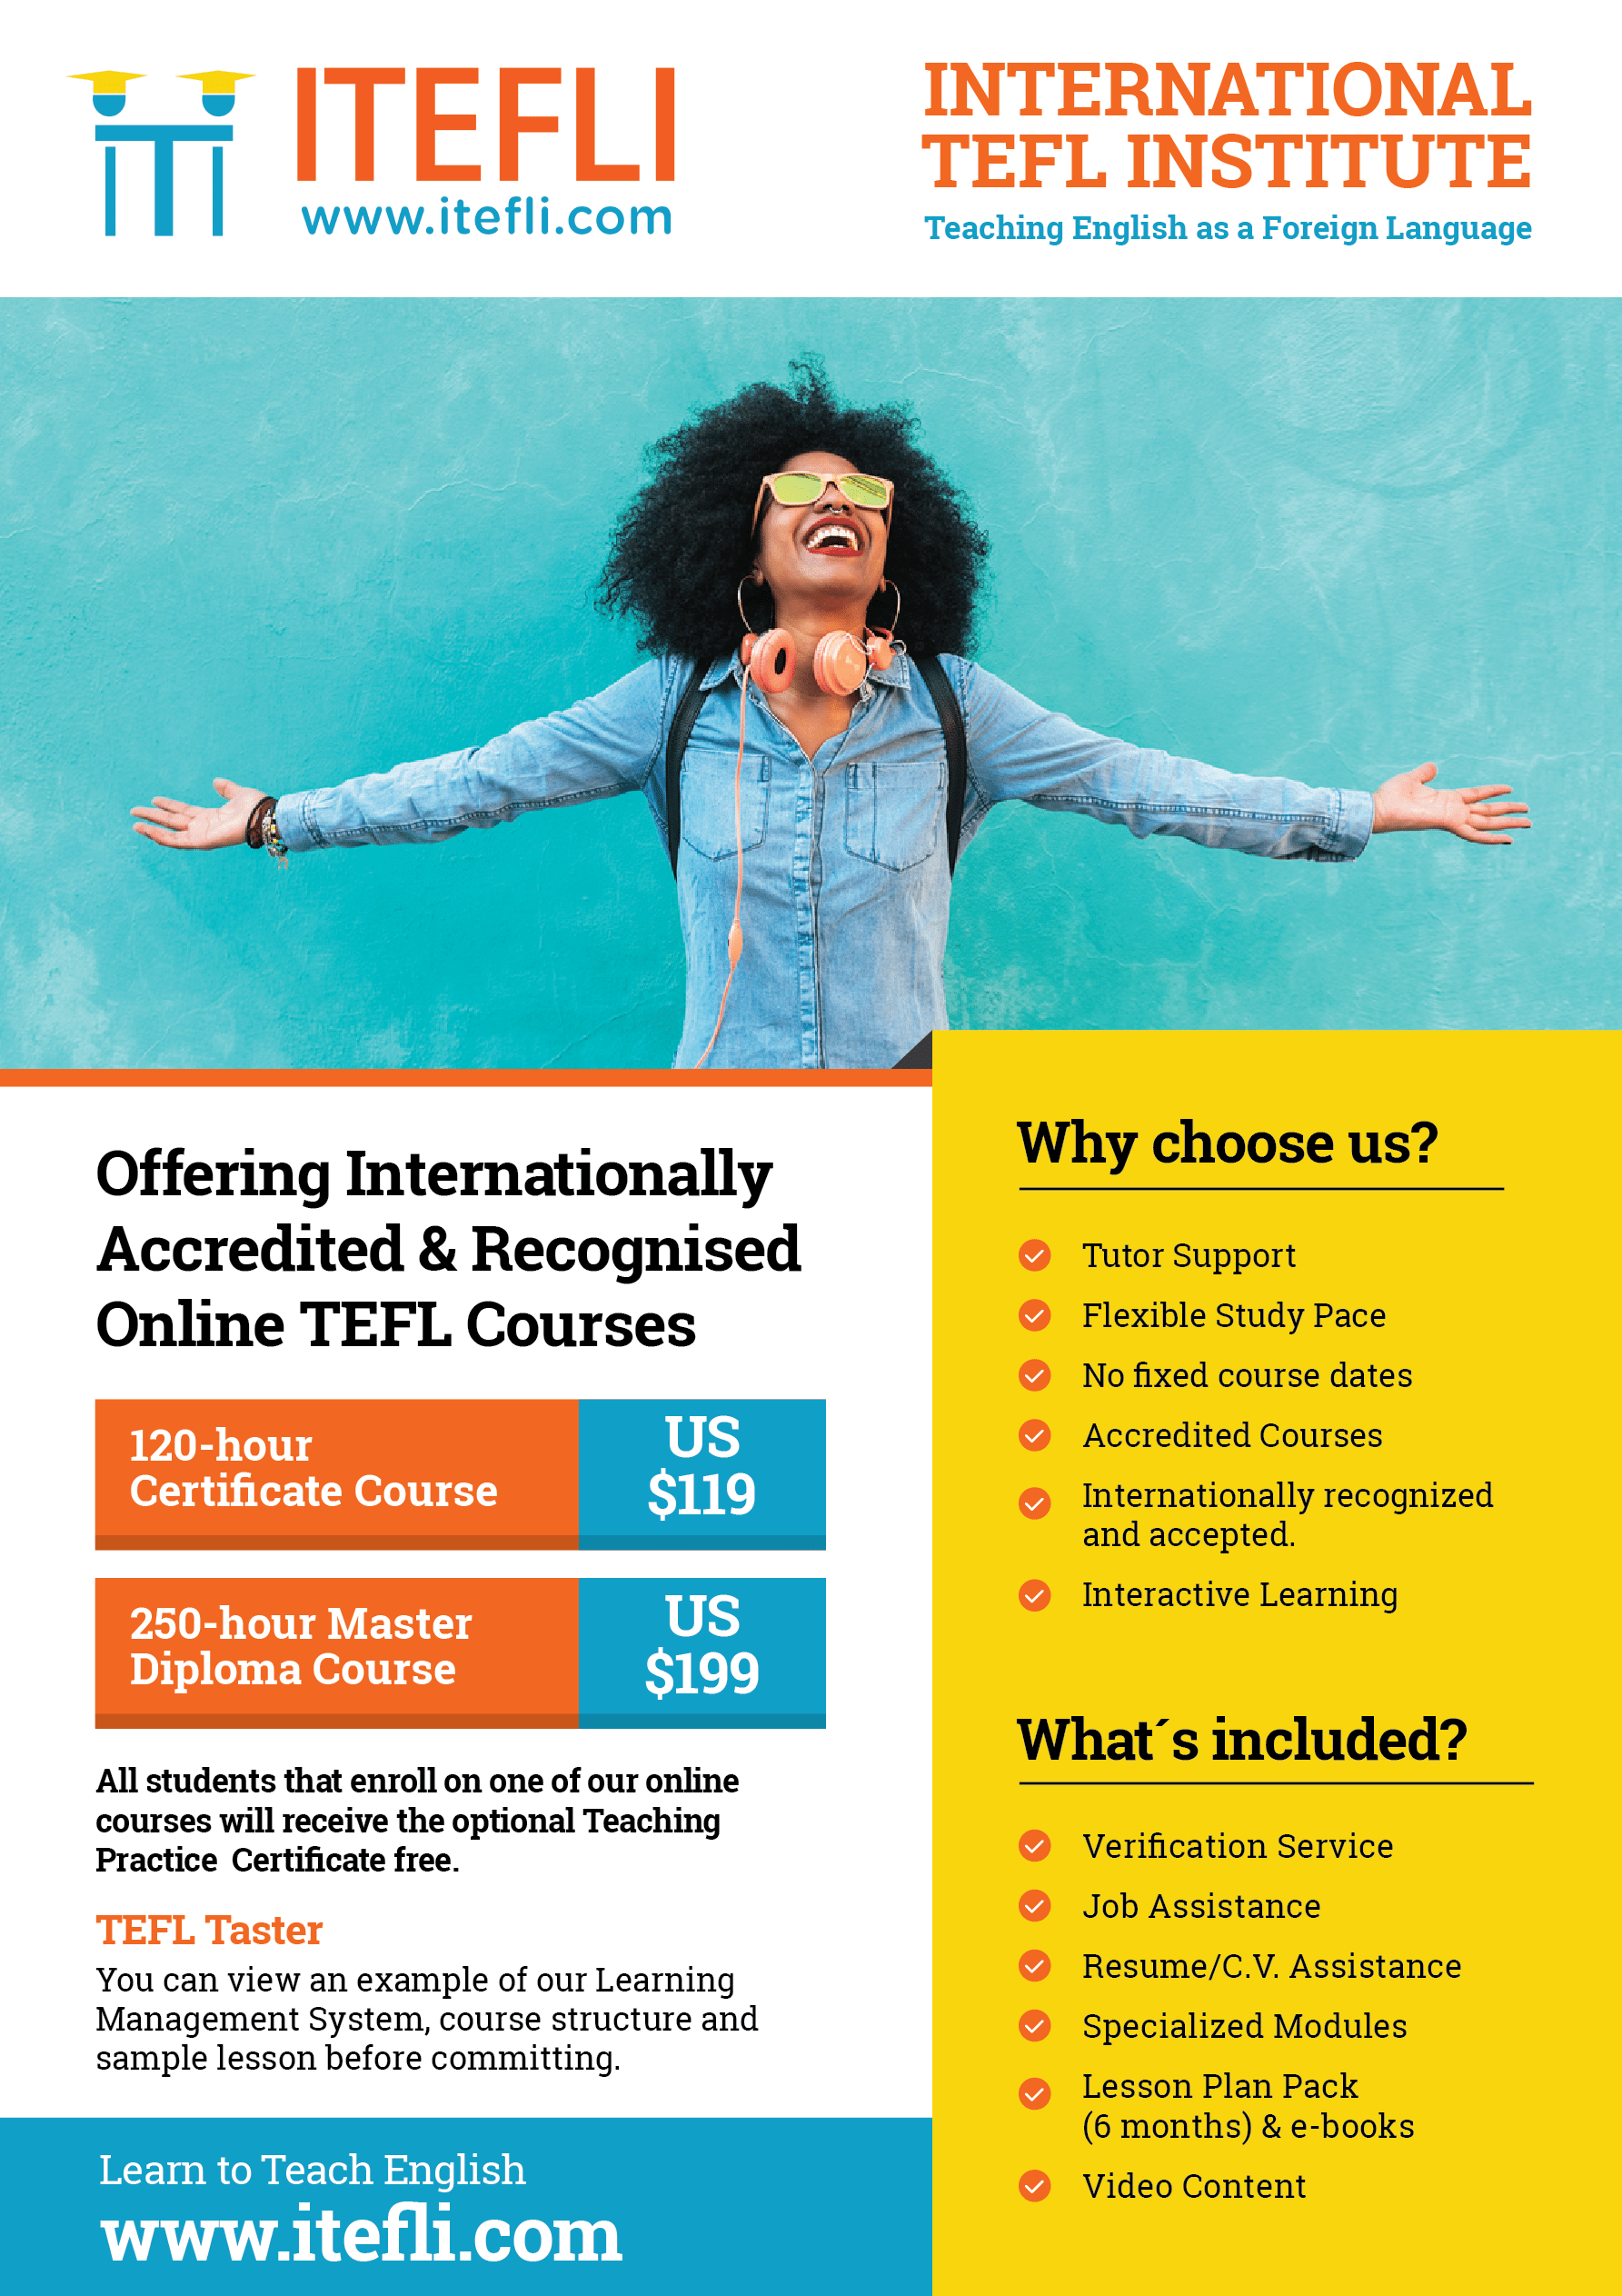 Online TEFL Courses